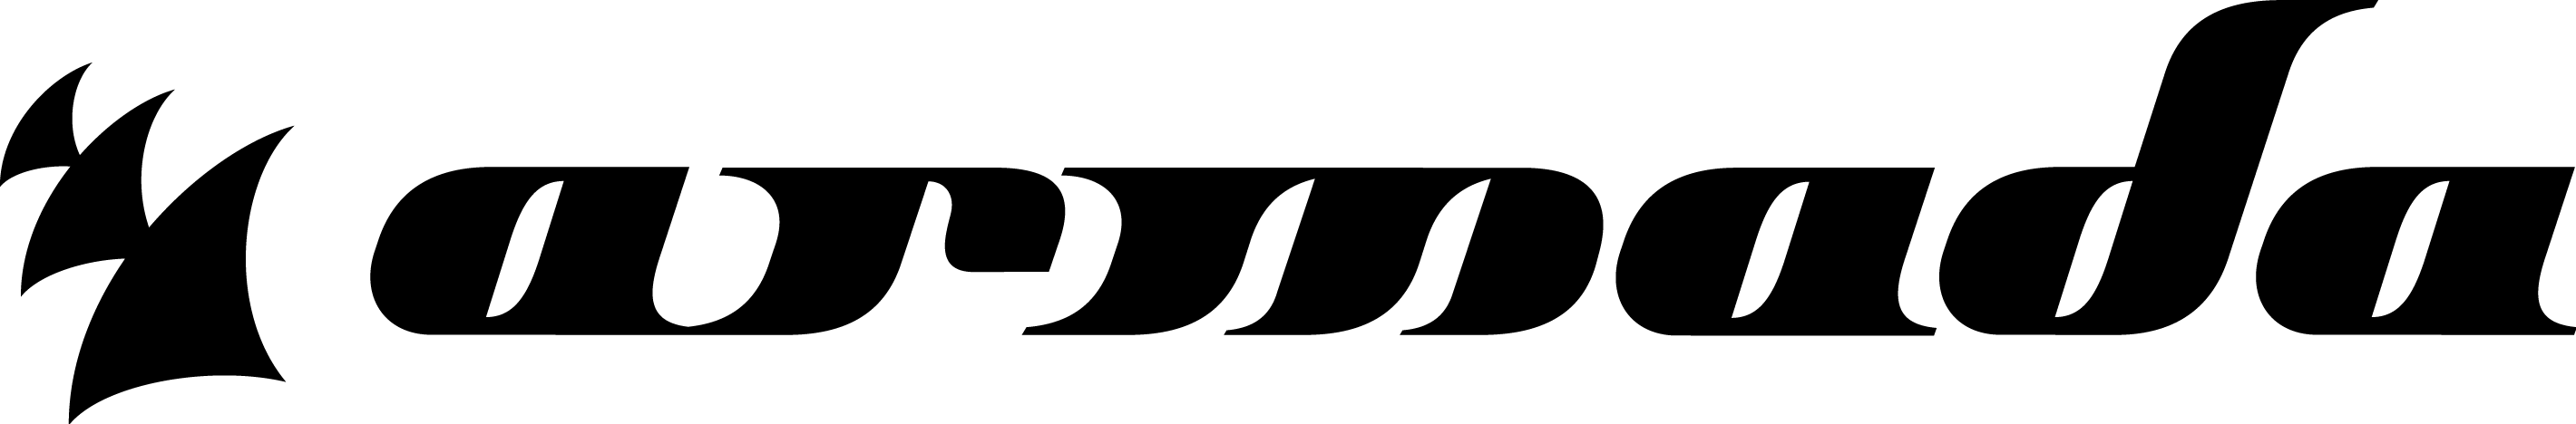 Armada Music logo (black)